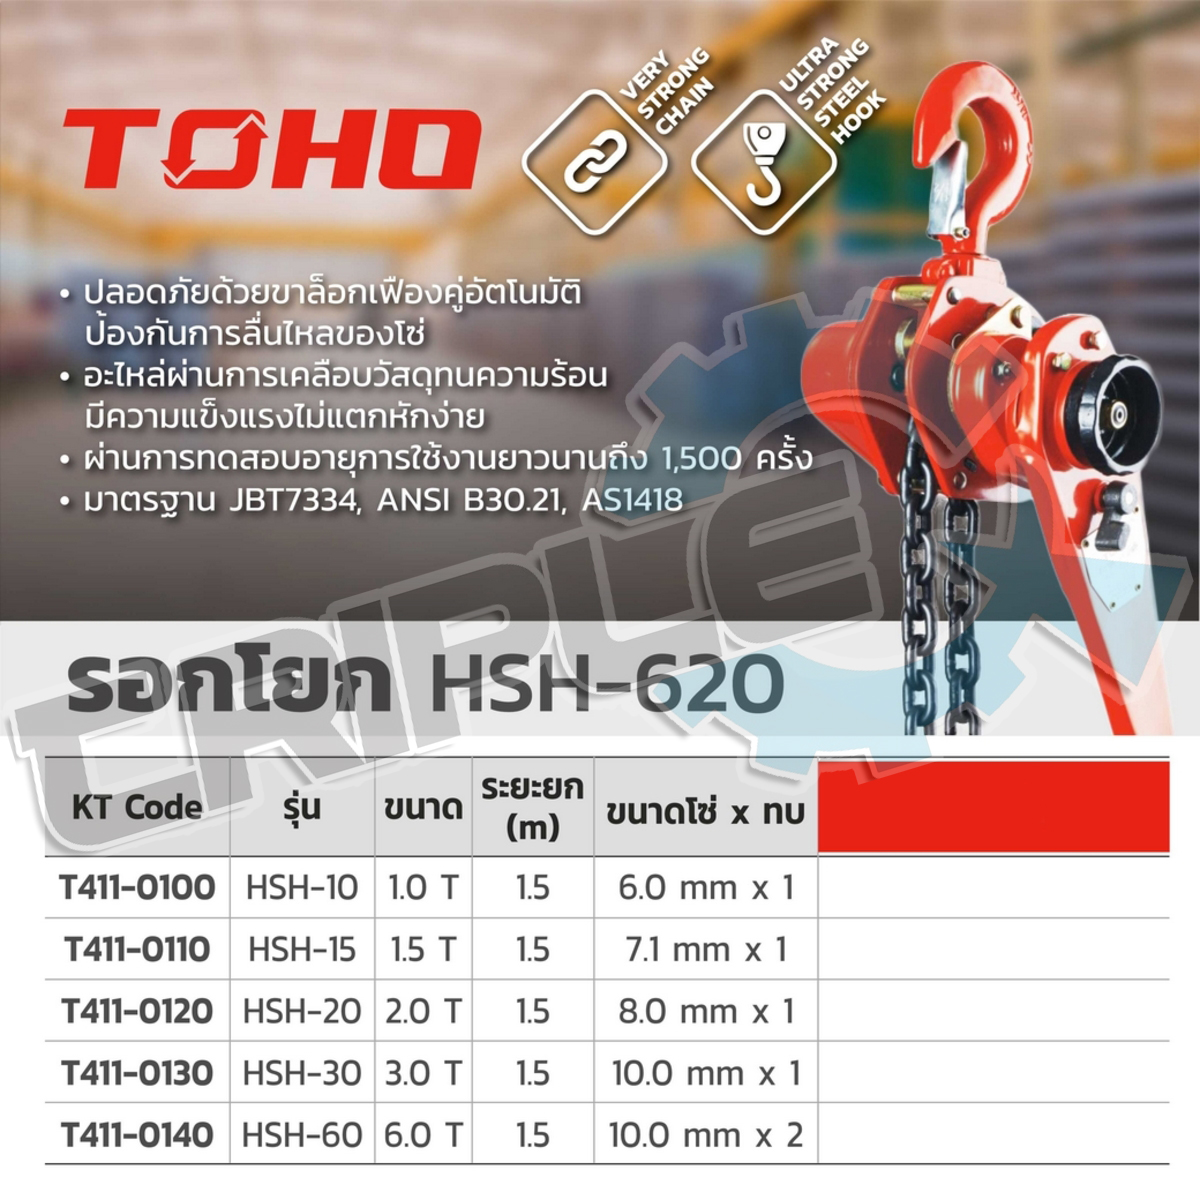 TOHO - รอกโยก HSH-10 ขนาด 1 ตัน